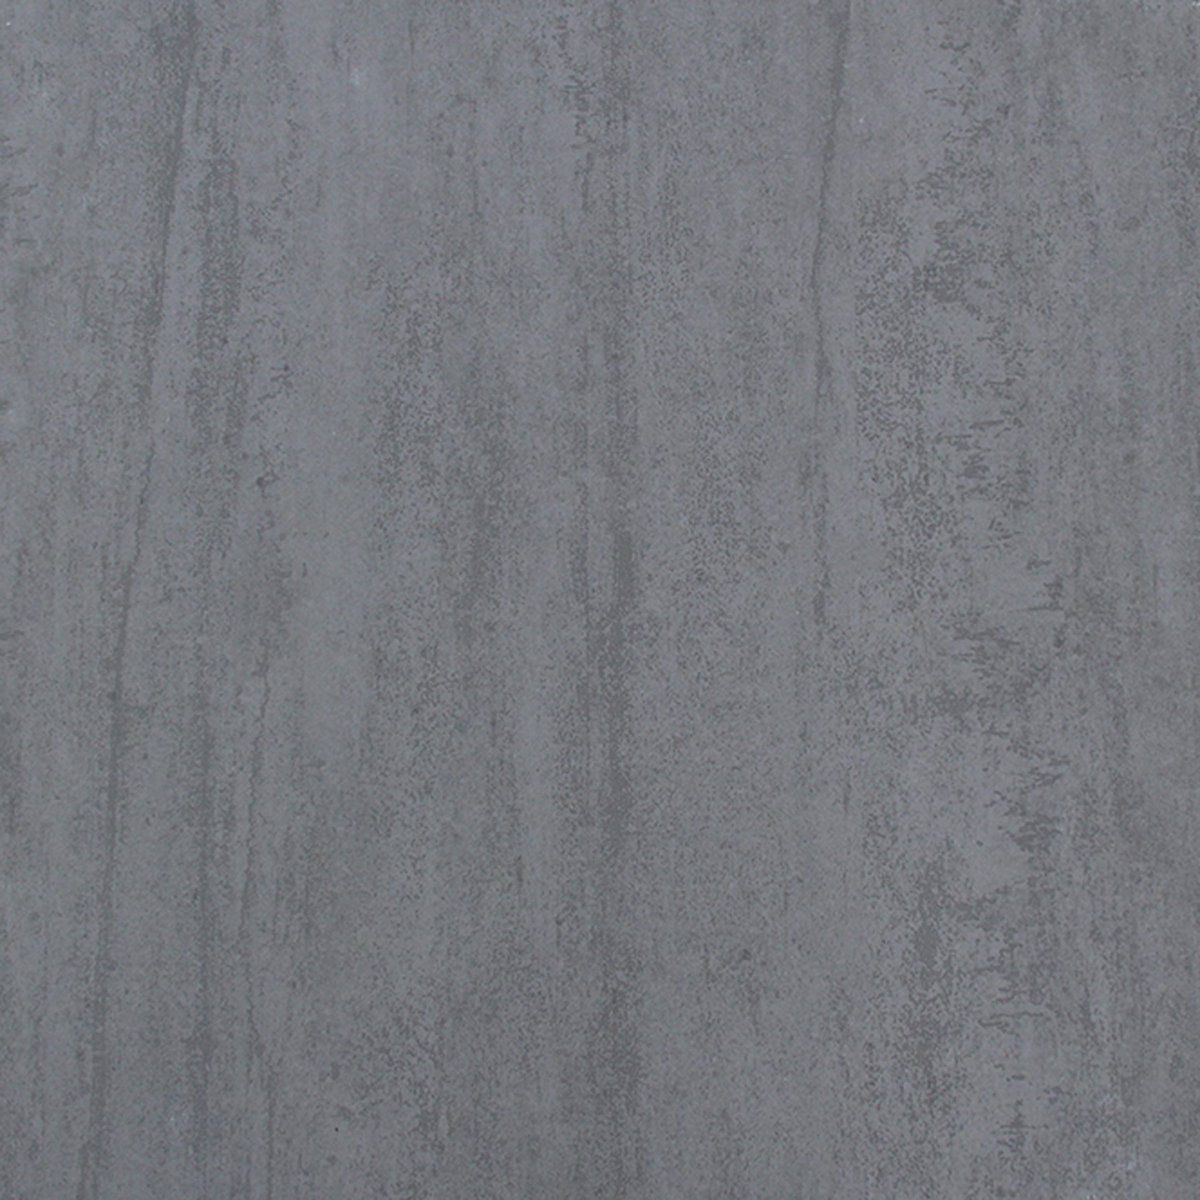 Fusion Grey keramische tegels cera4line mento 60x60x4 cmGardenlux